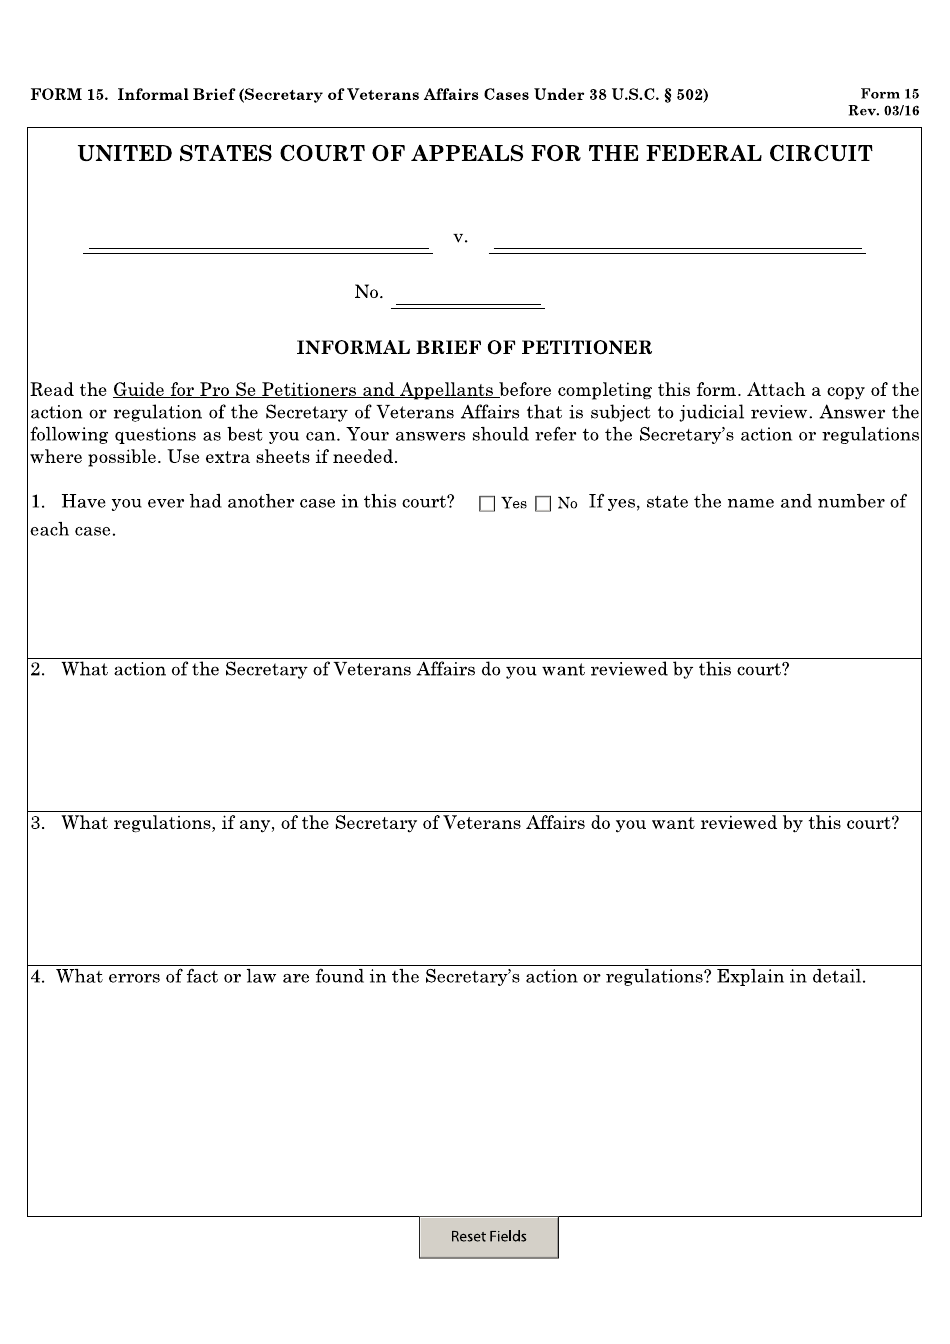 Form 15 Informal Brief (Secretary of Veterans Affairs Cases Under 38 U.s.c. 502), Page 1